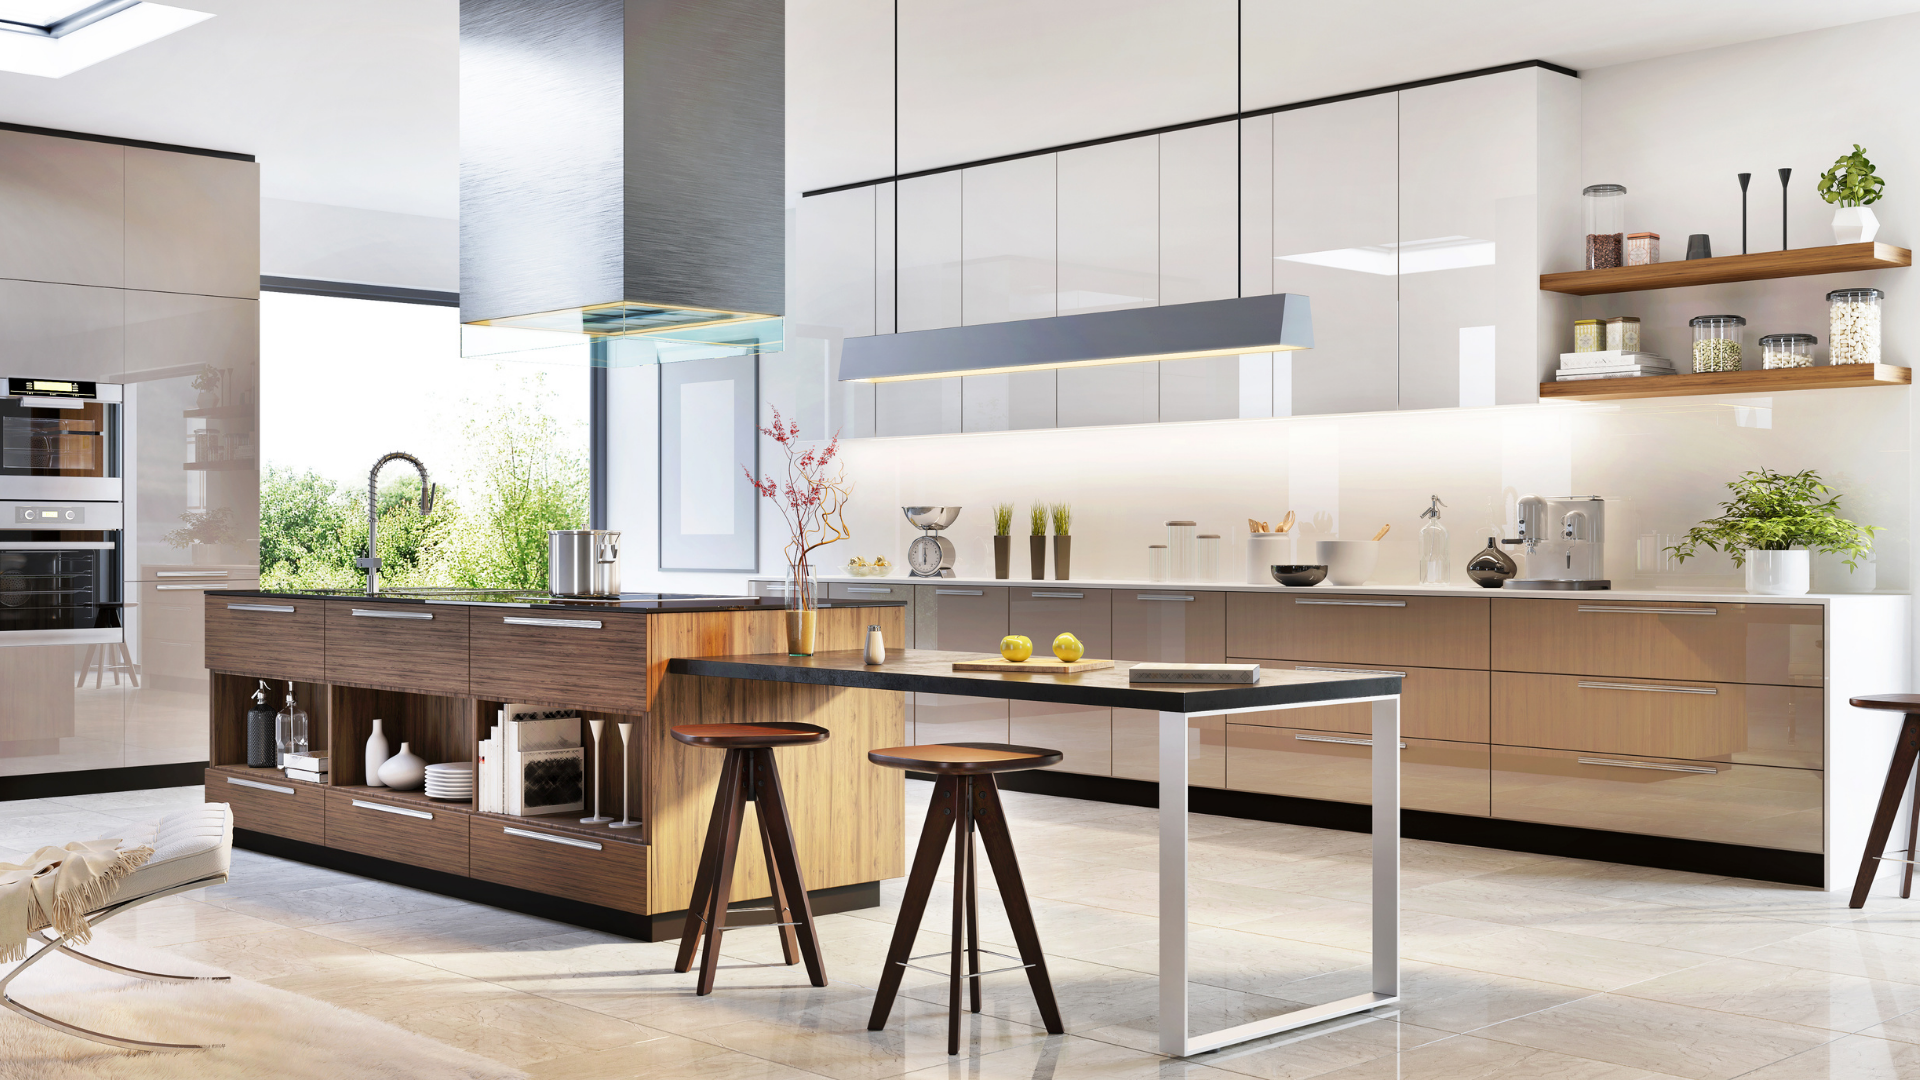 Kitchen Cabinets – Making Your Kitchen Pop With Coastal Design Trends